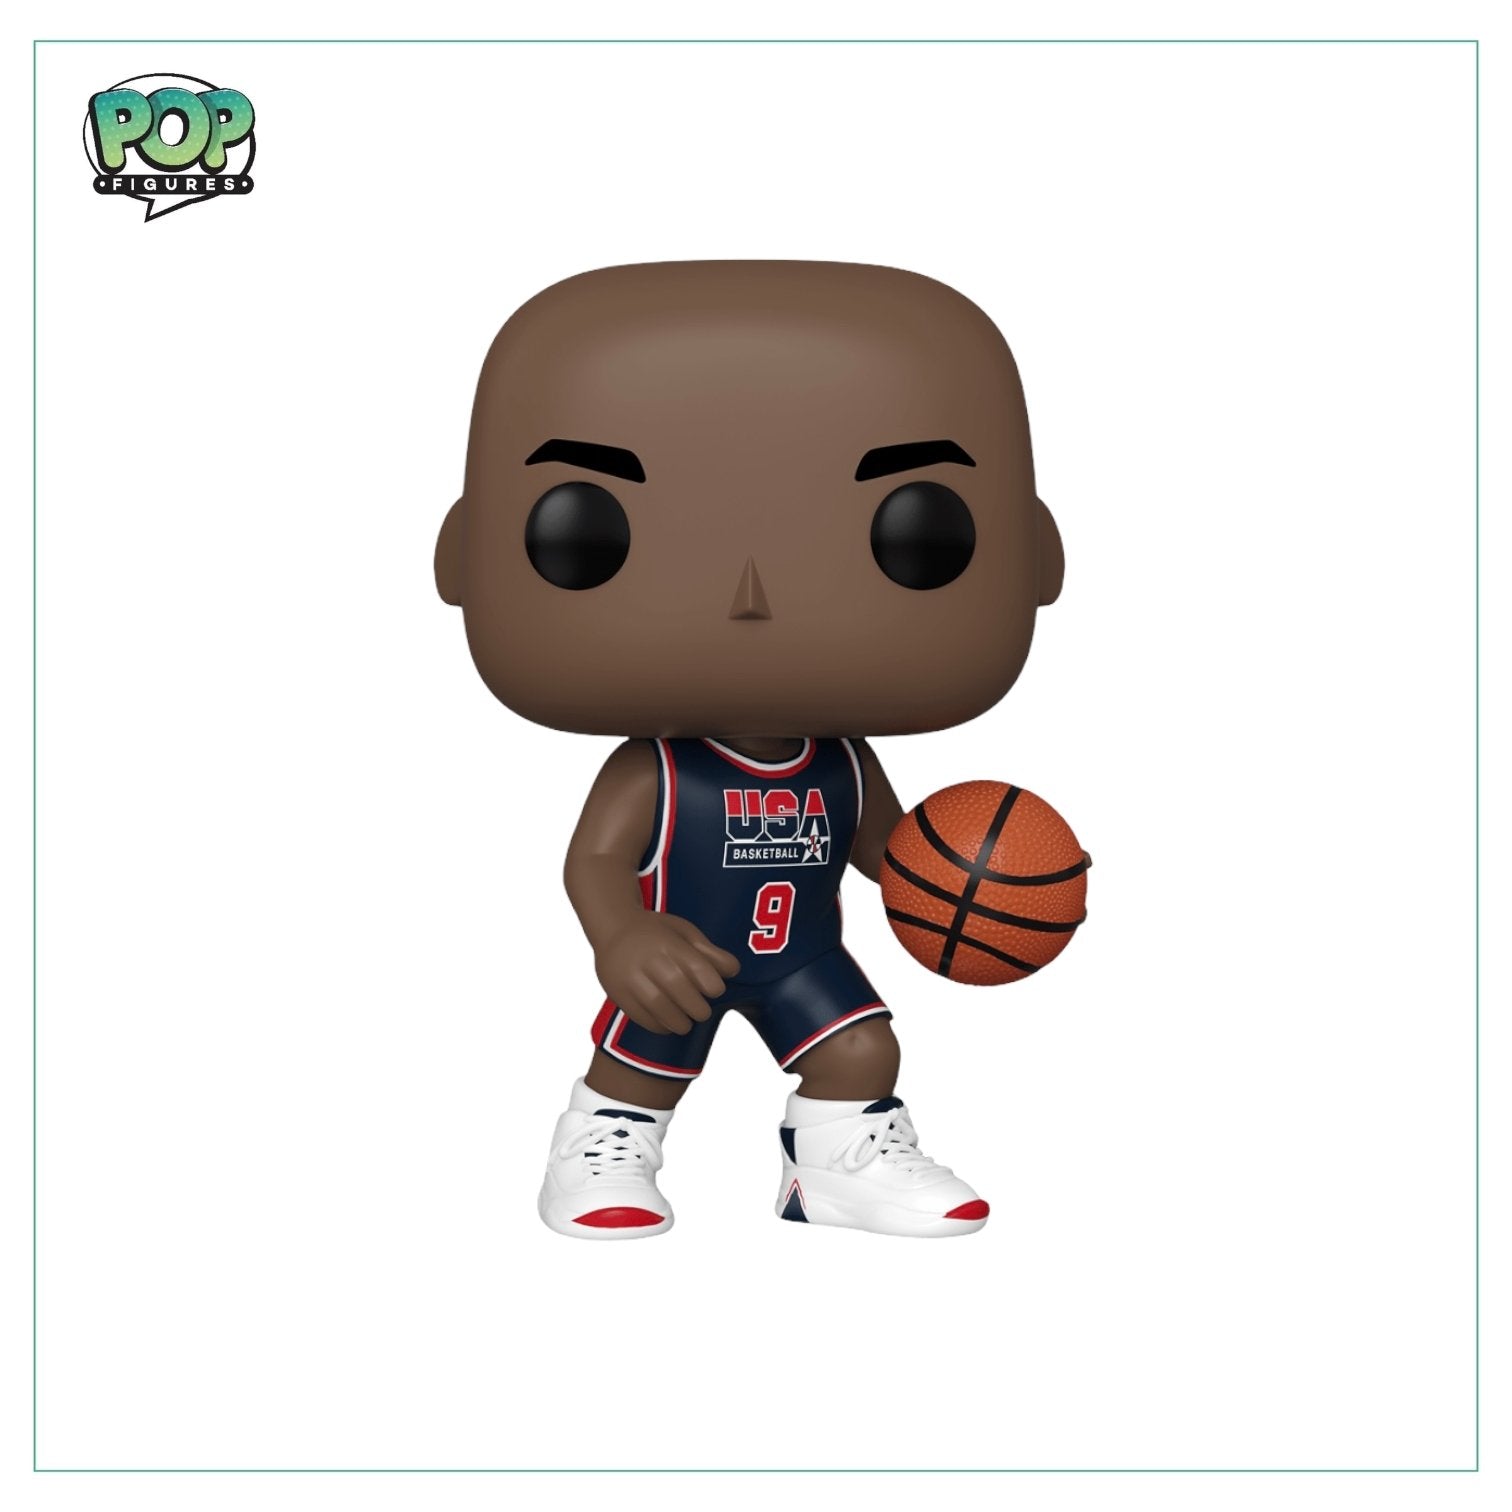 USA Basketball - Michael Jordan (Jumbo) - Walmart Exclusive - PREORDER - Pop Figures | Funko | Pop Funko | Funko Pop